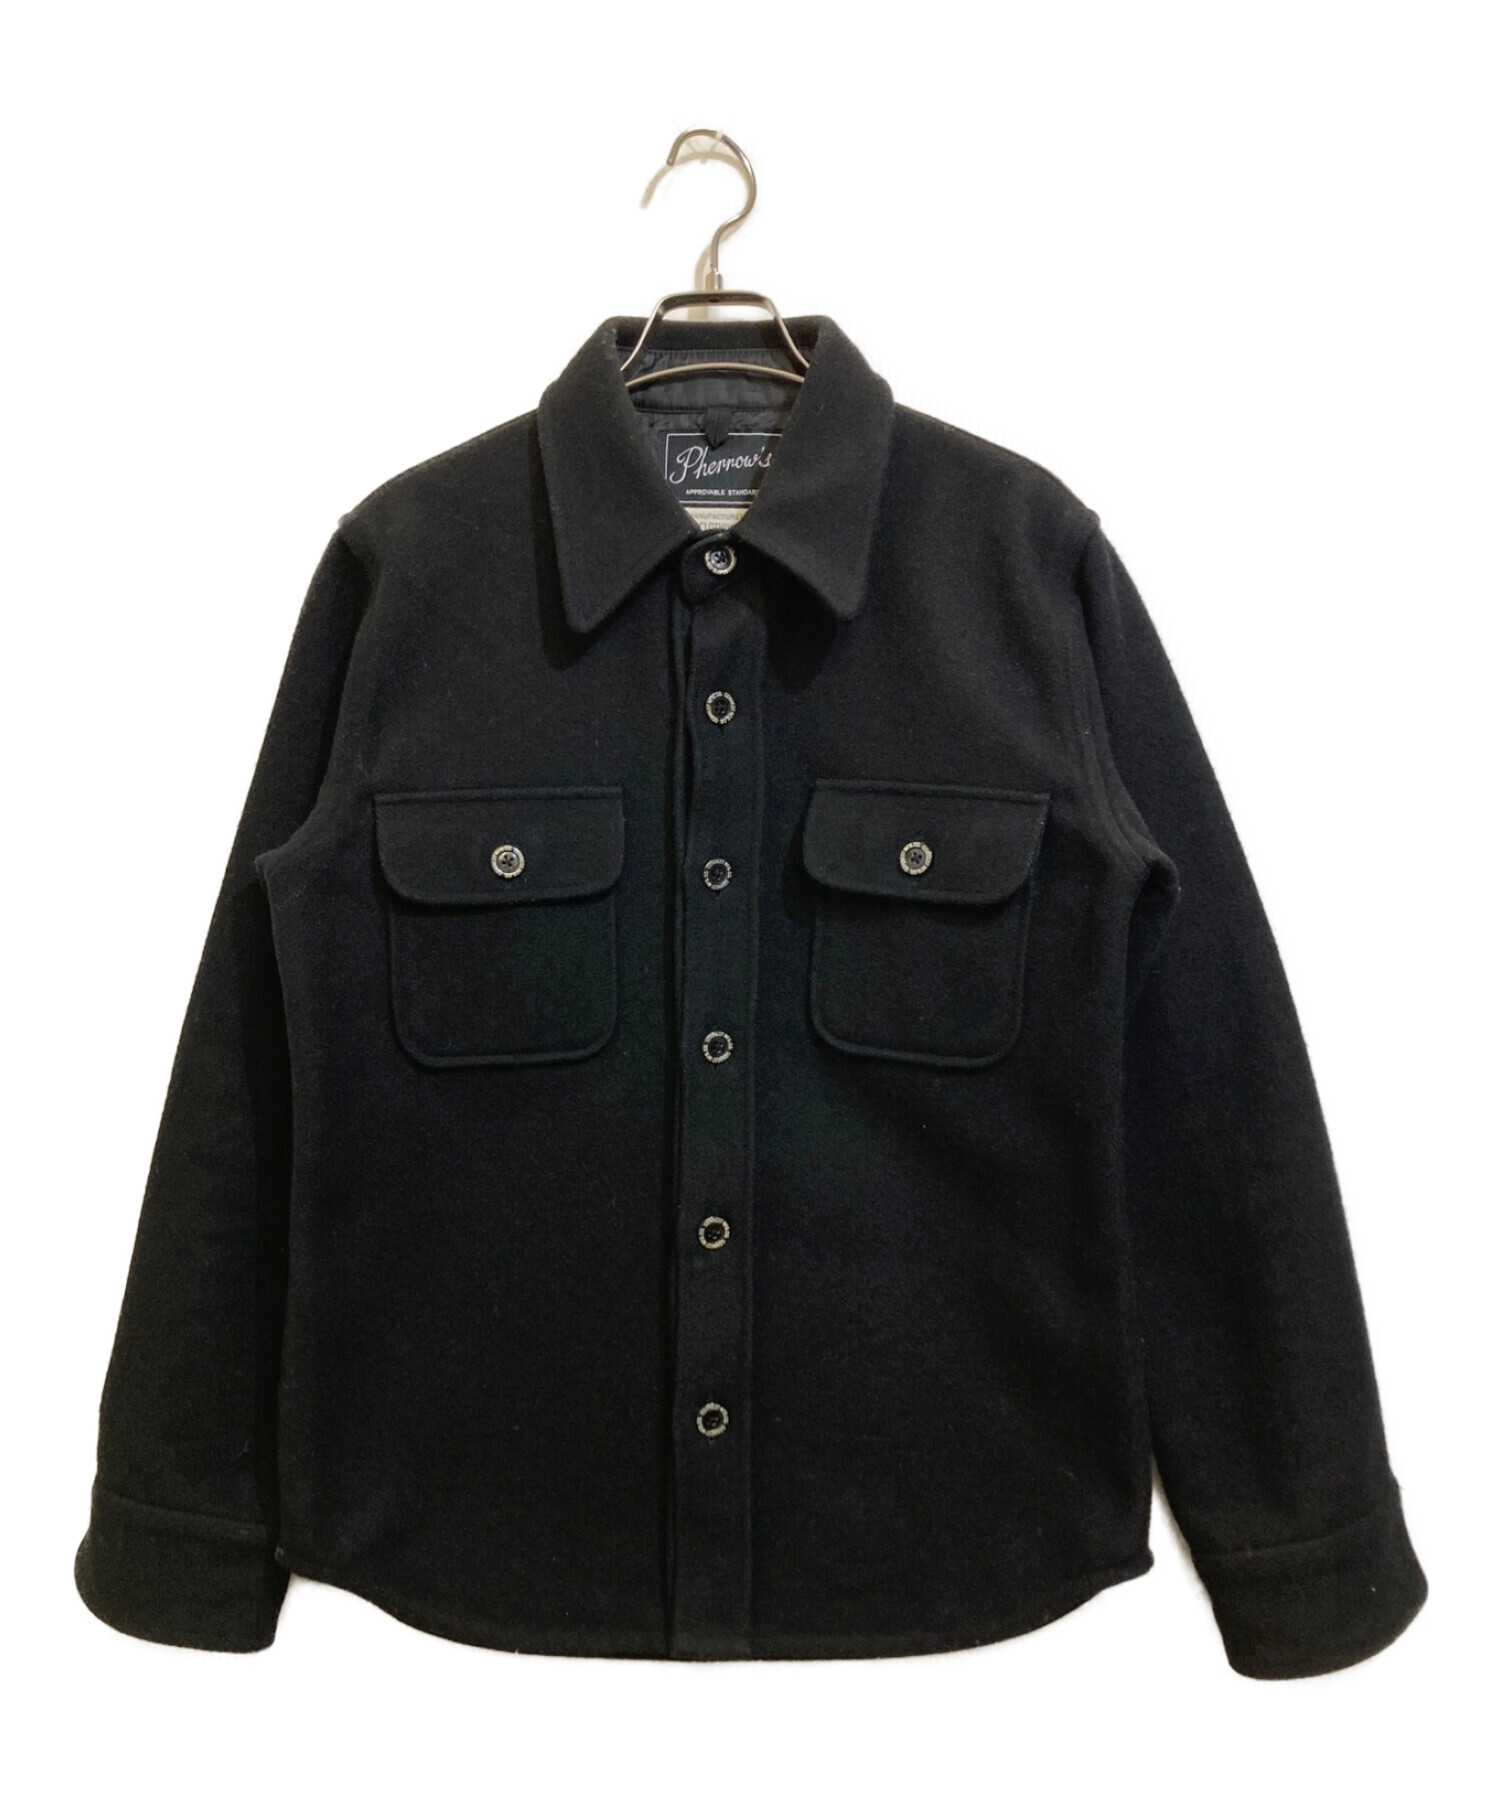 PHERROW'S (フェローズ) CPOジャケット ブラック サイズ:38